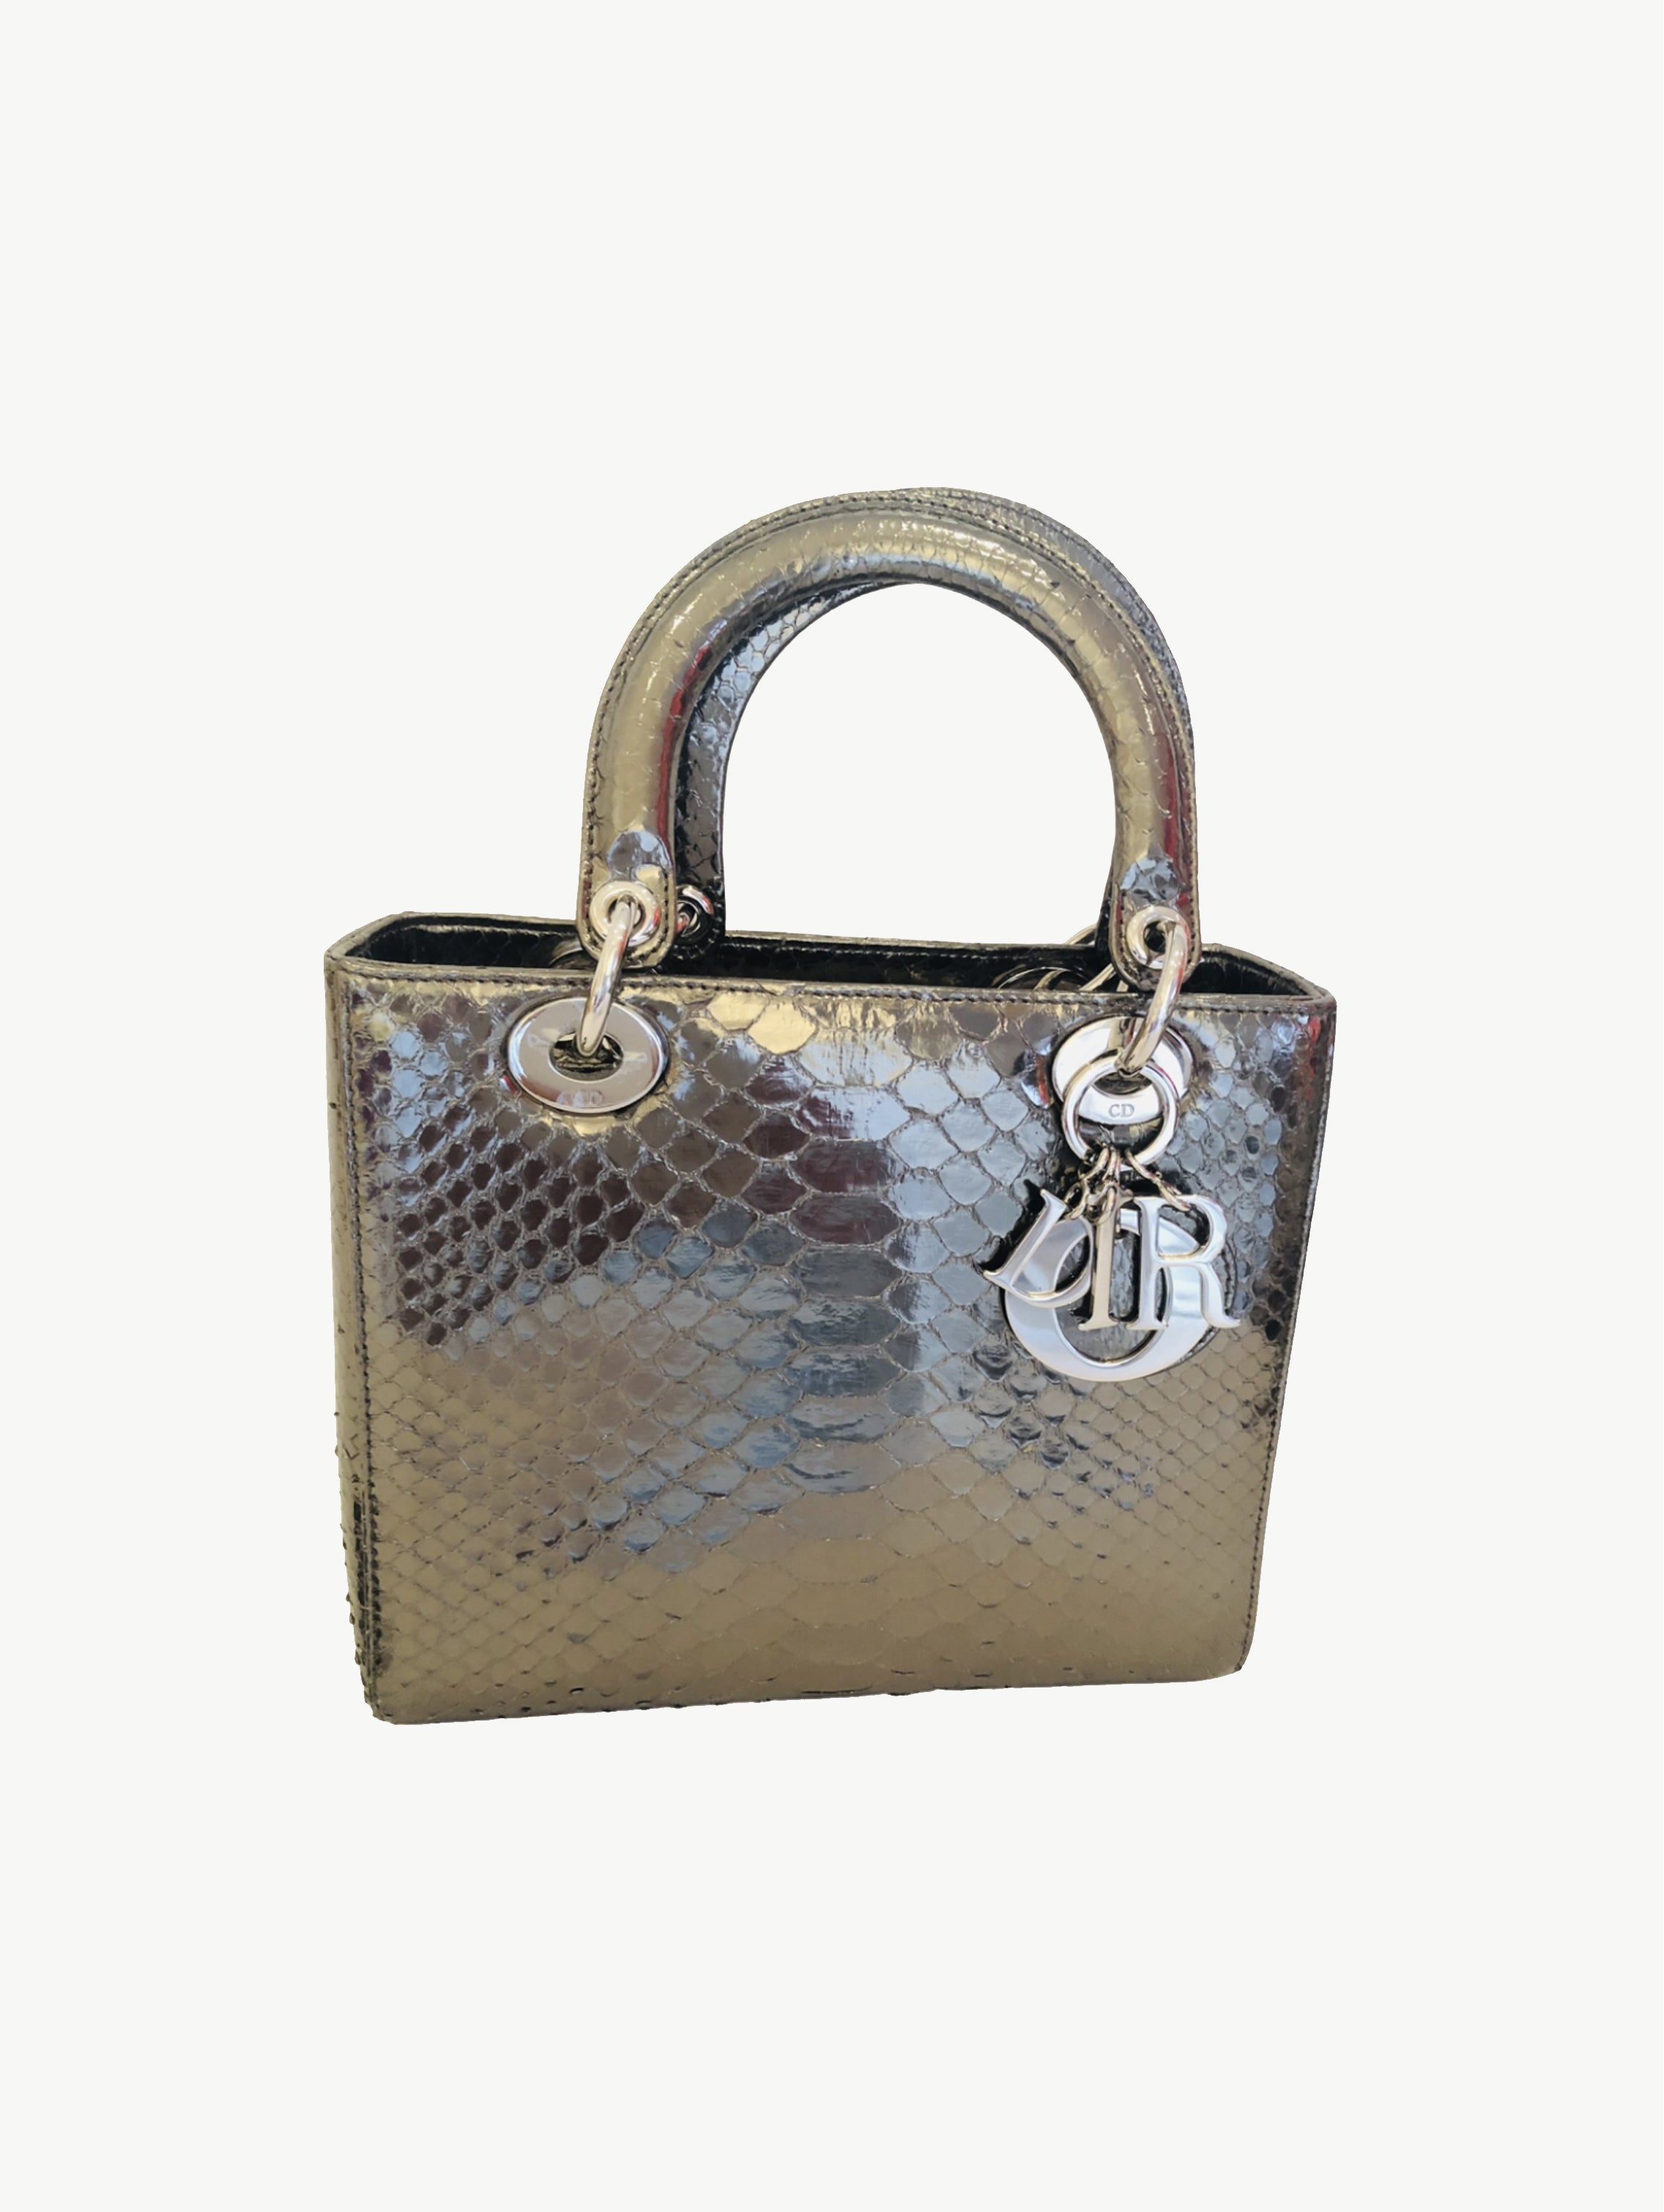 Lady Dior silver mini bag